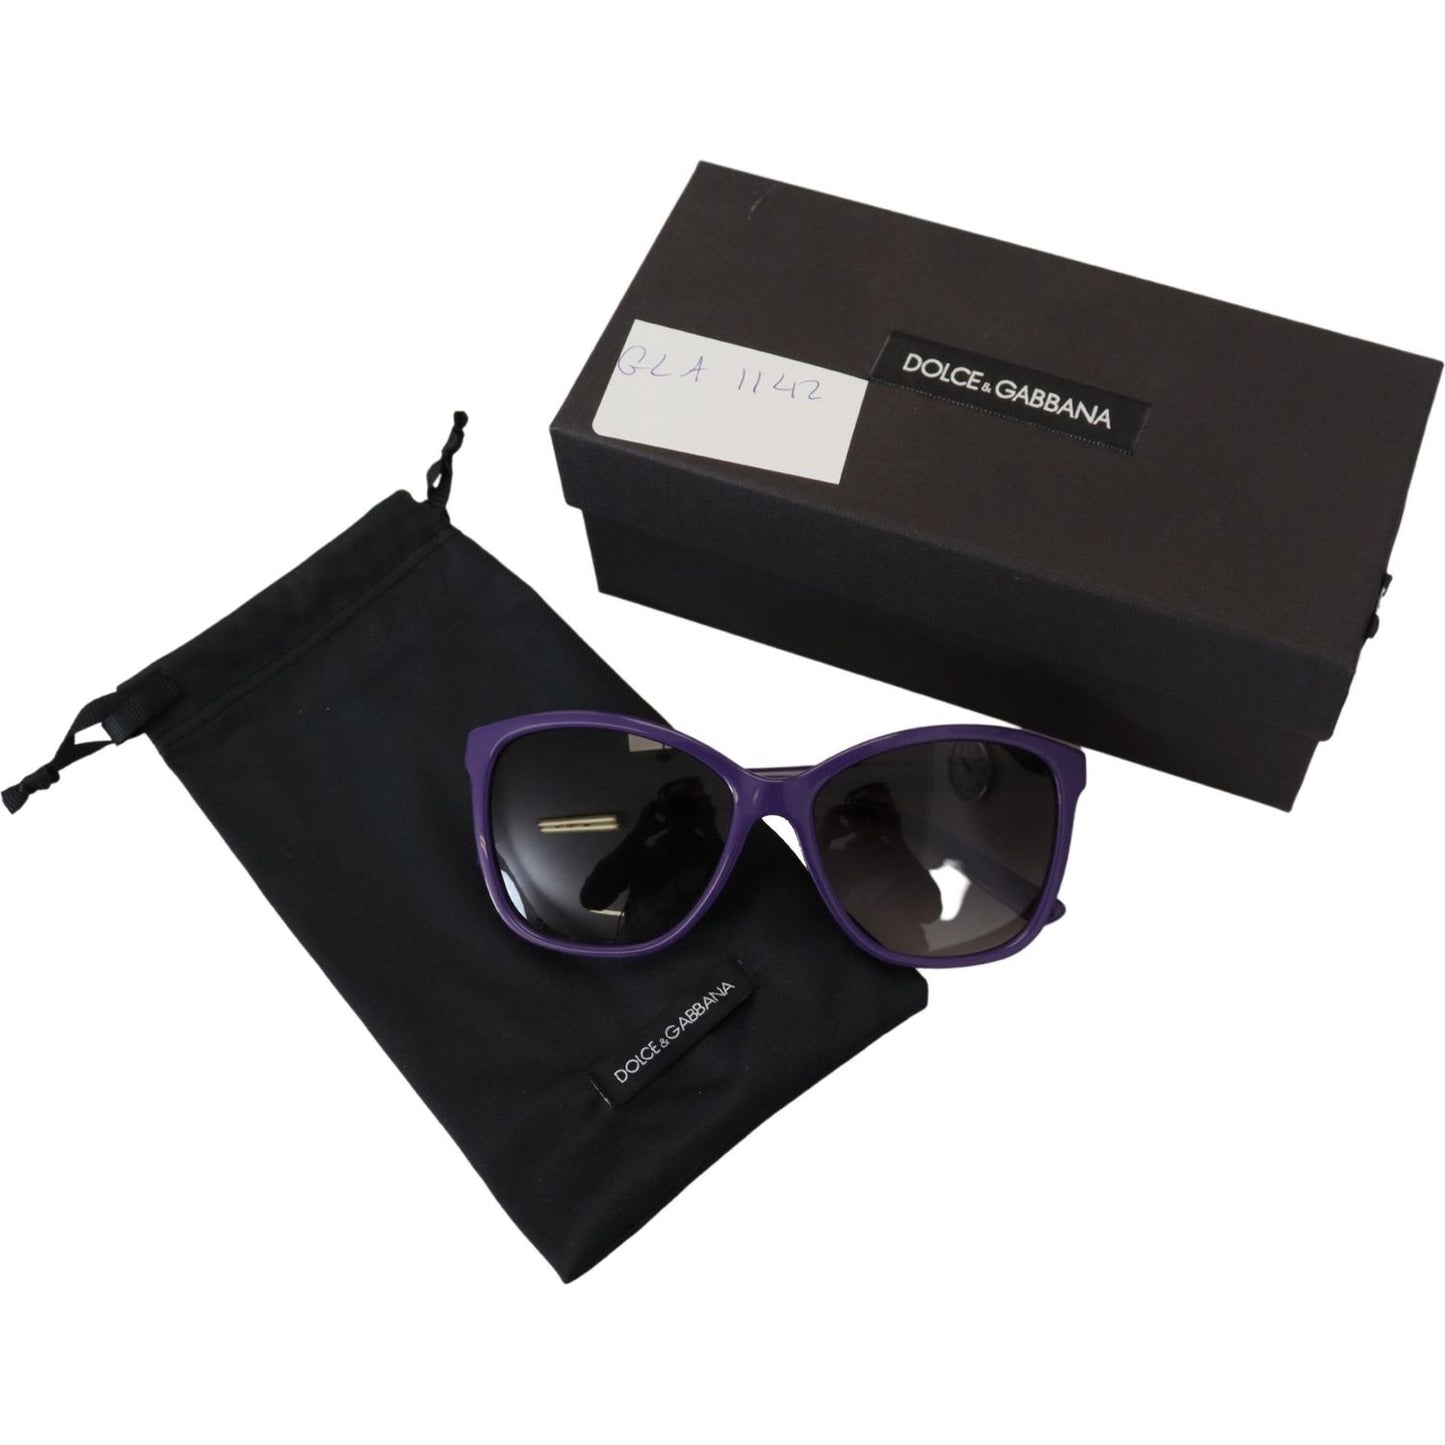 Dolce & Gabbana Elegant Violet Round Sunglasses for Women violet-acetate-frame-round-shades-dg4170m-sunglasses